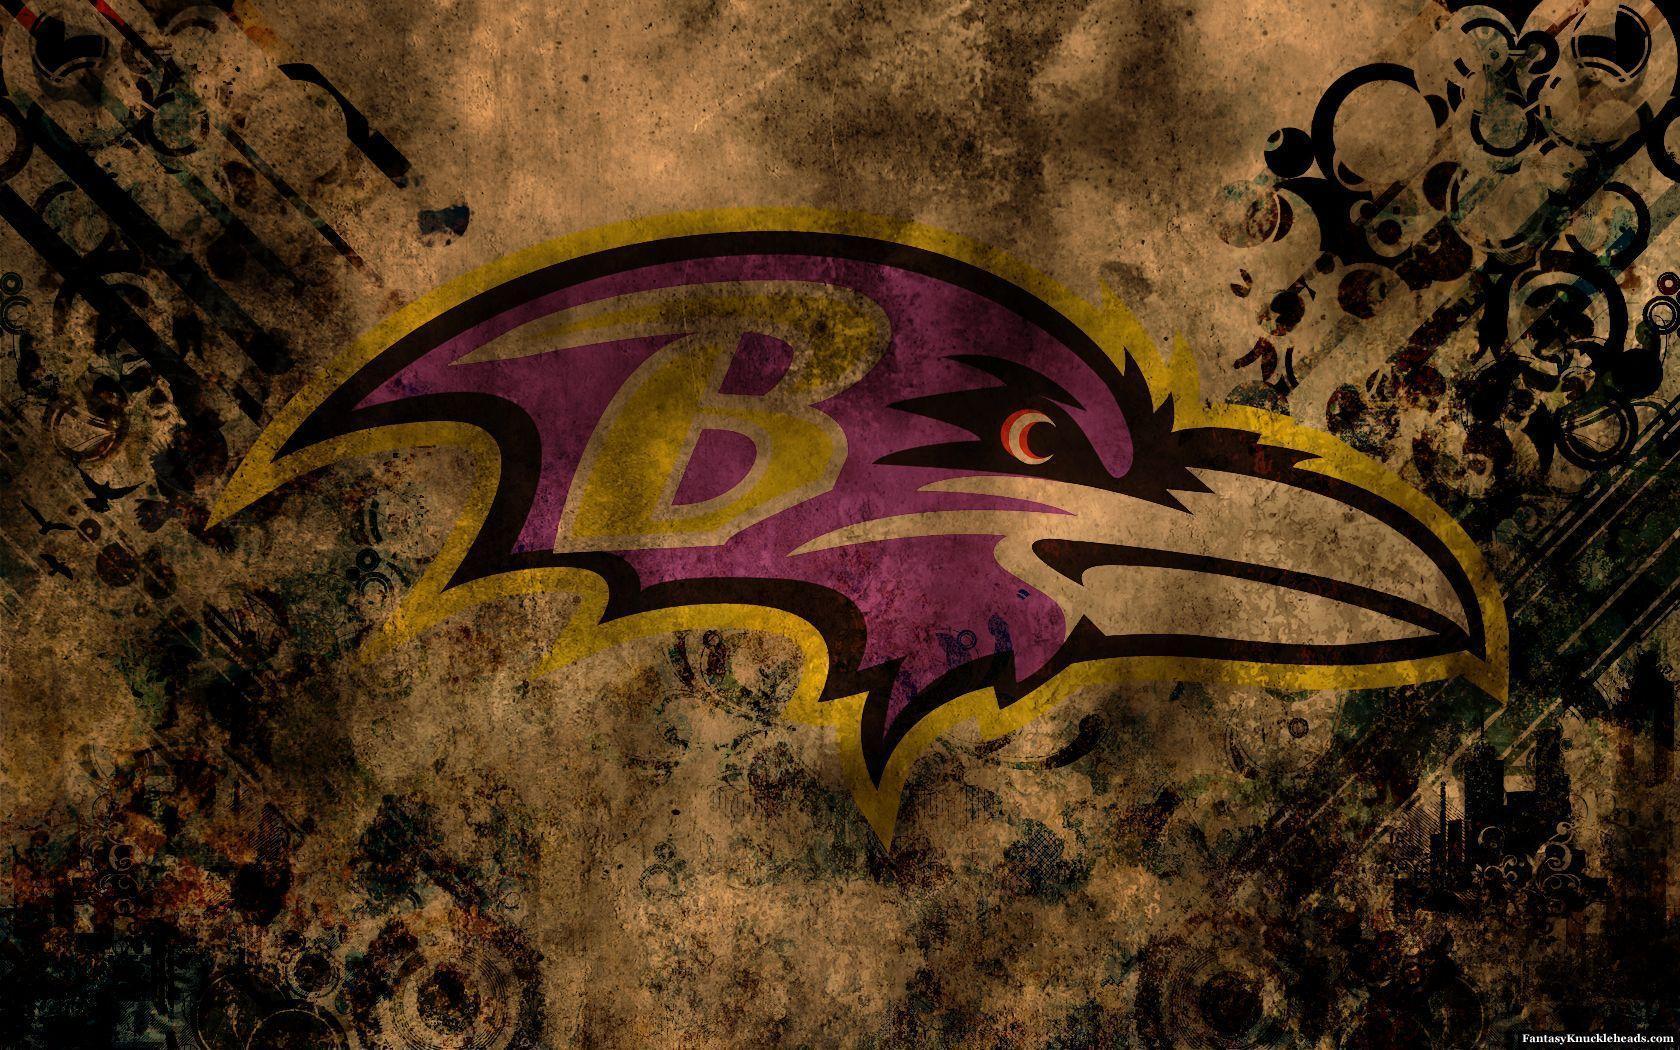 Ravens Background